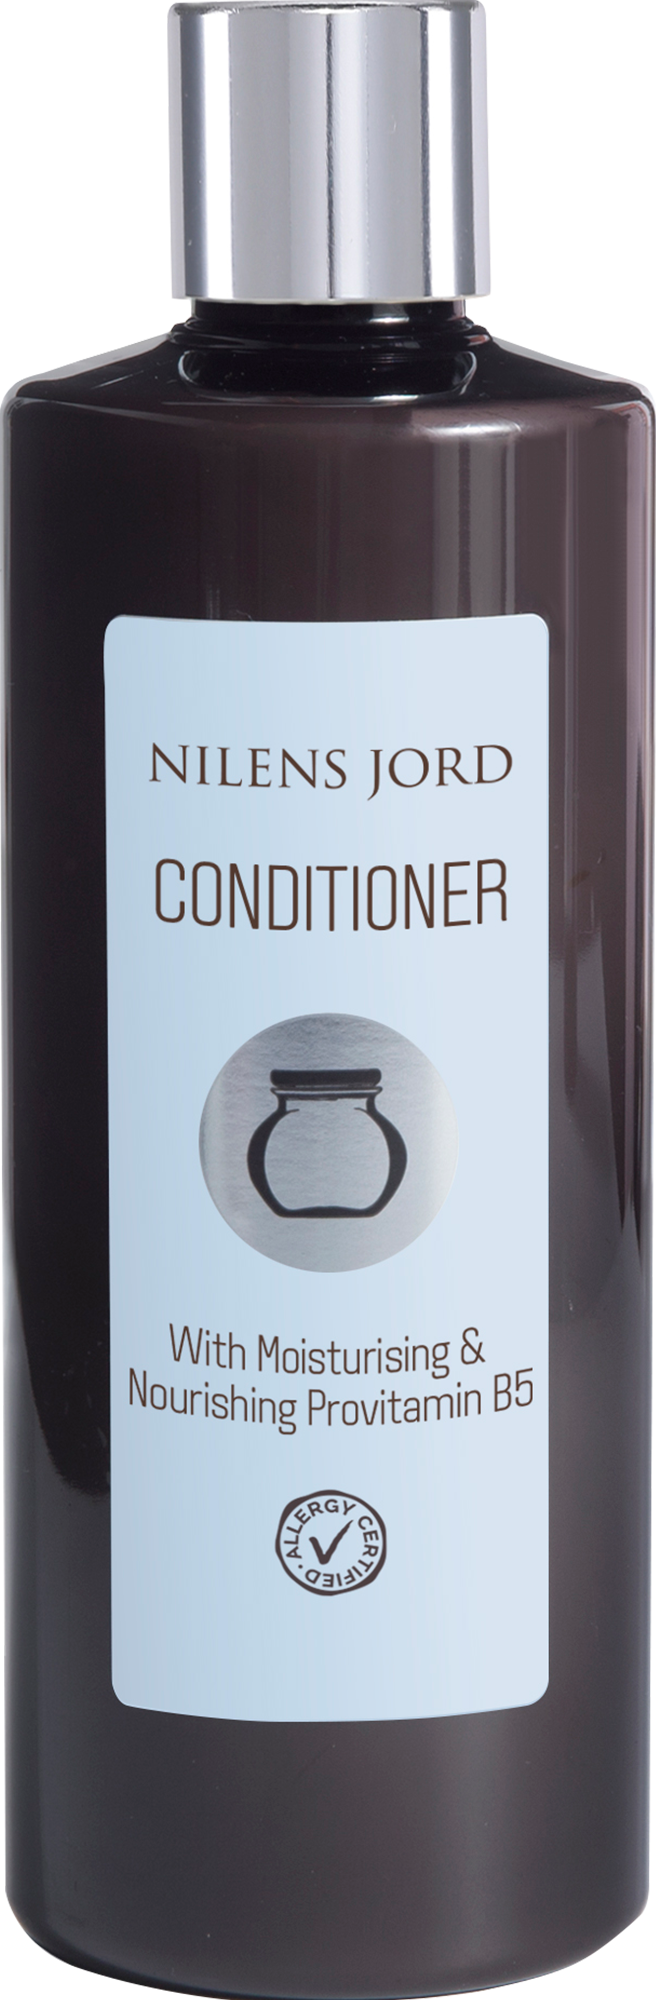 Nilens Jord Conditioner 300 ml.